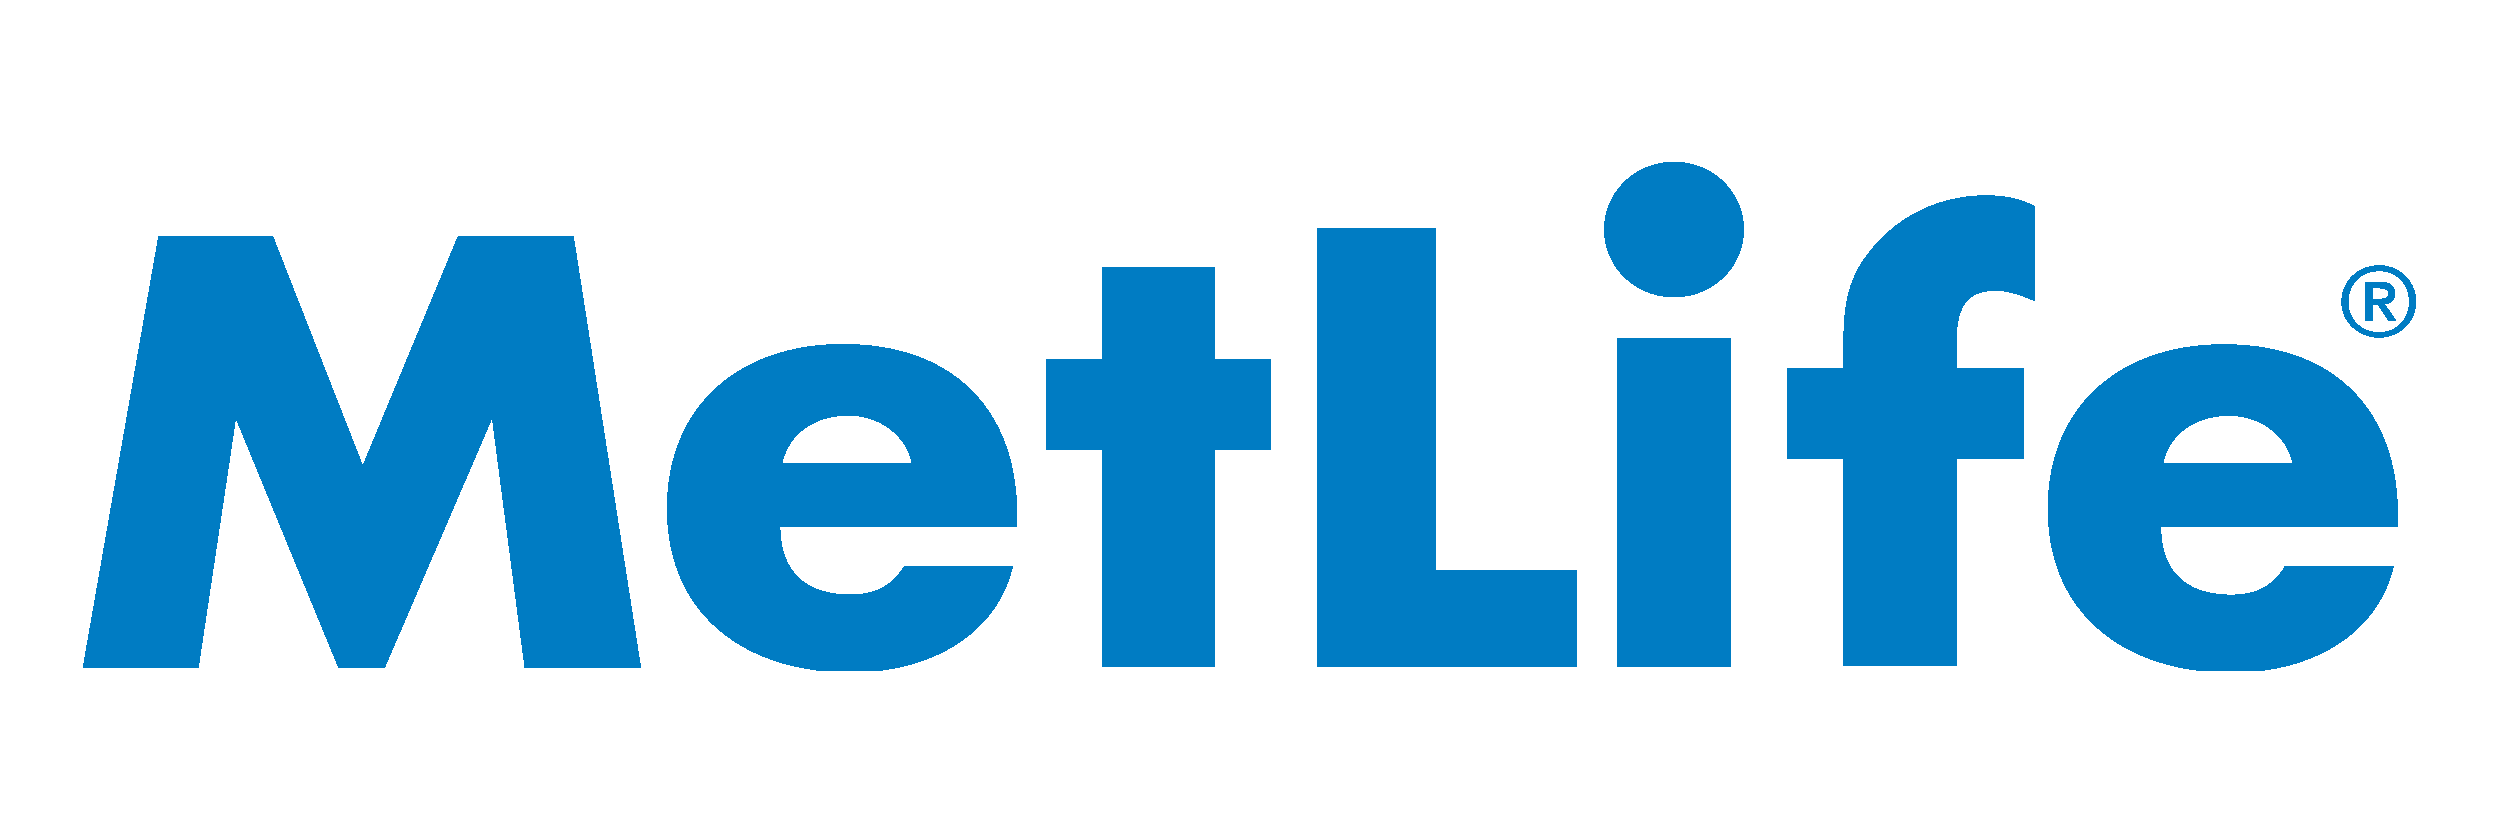 MetLife Logo | Statewide Insurance Agency